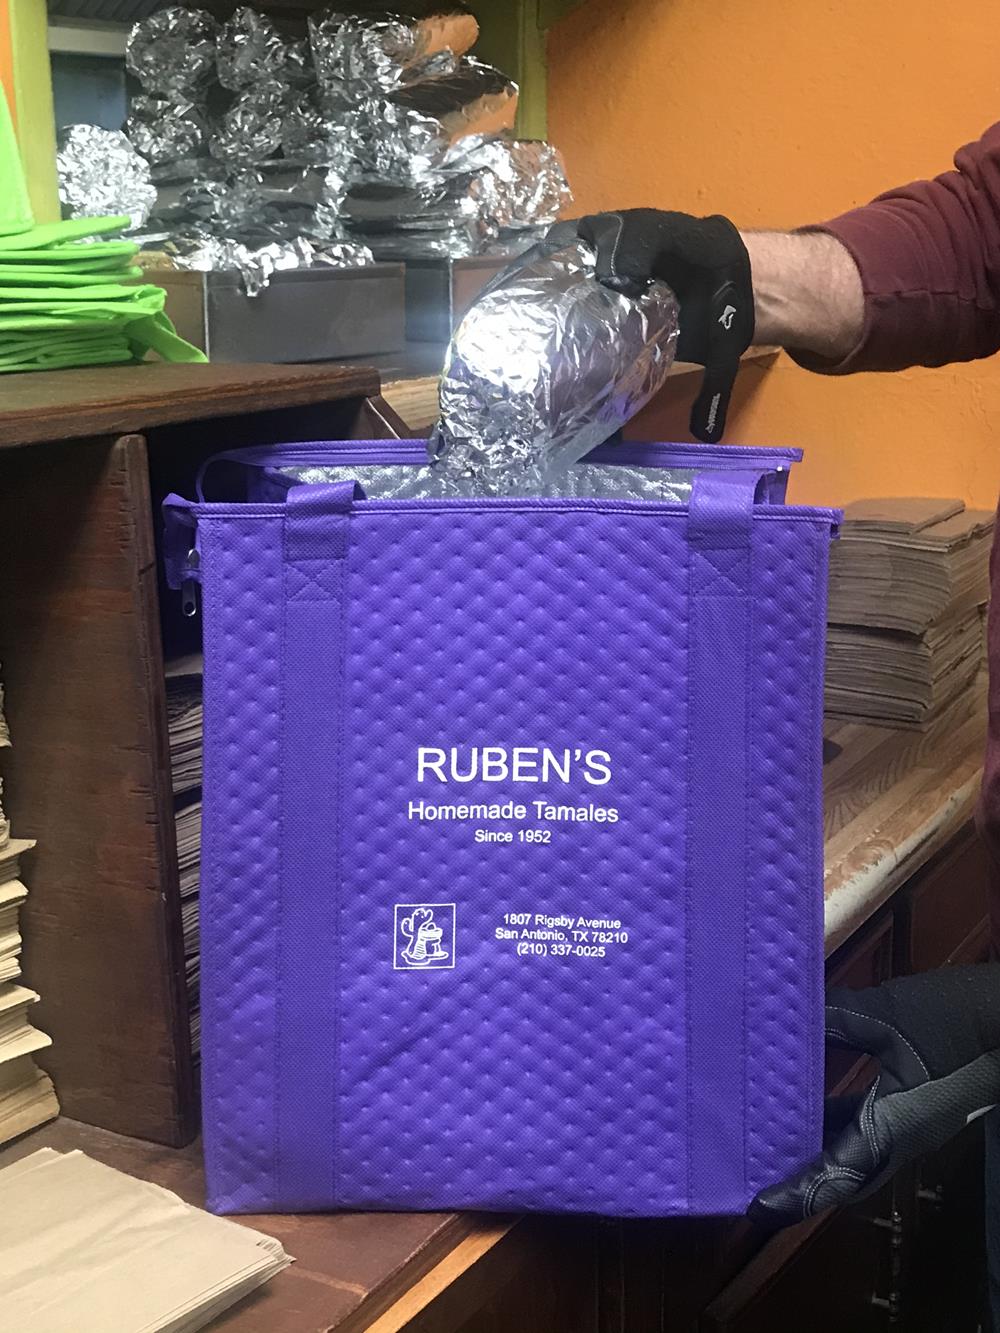 a person putting foil in a purple bag